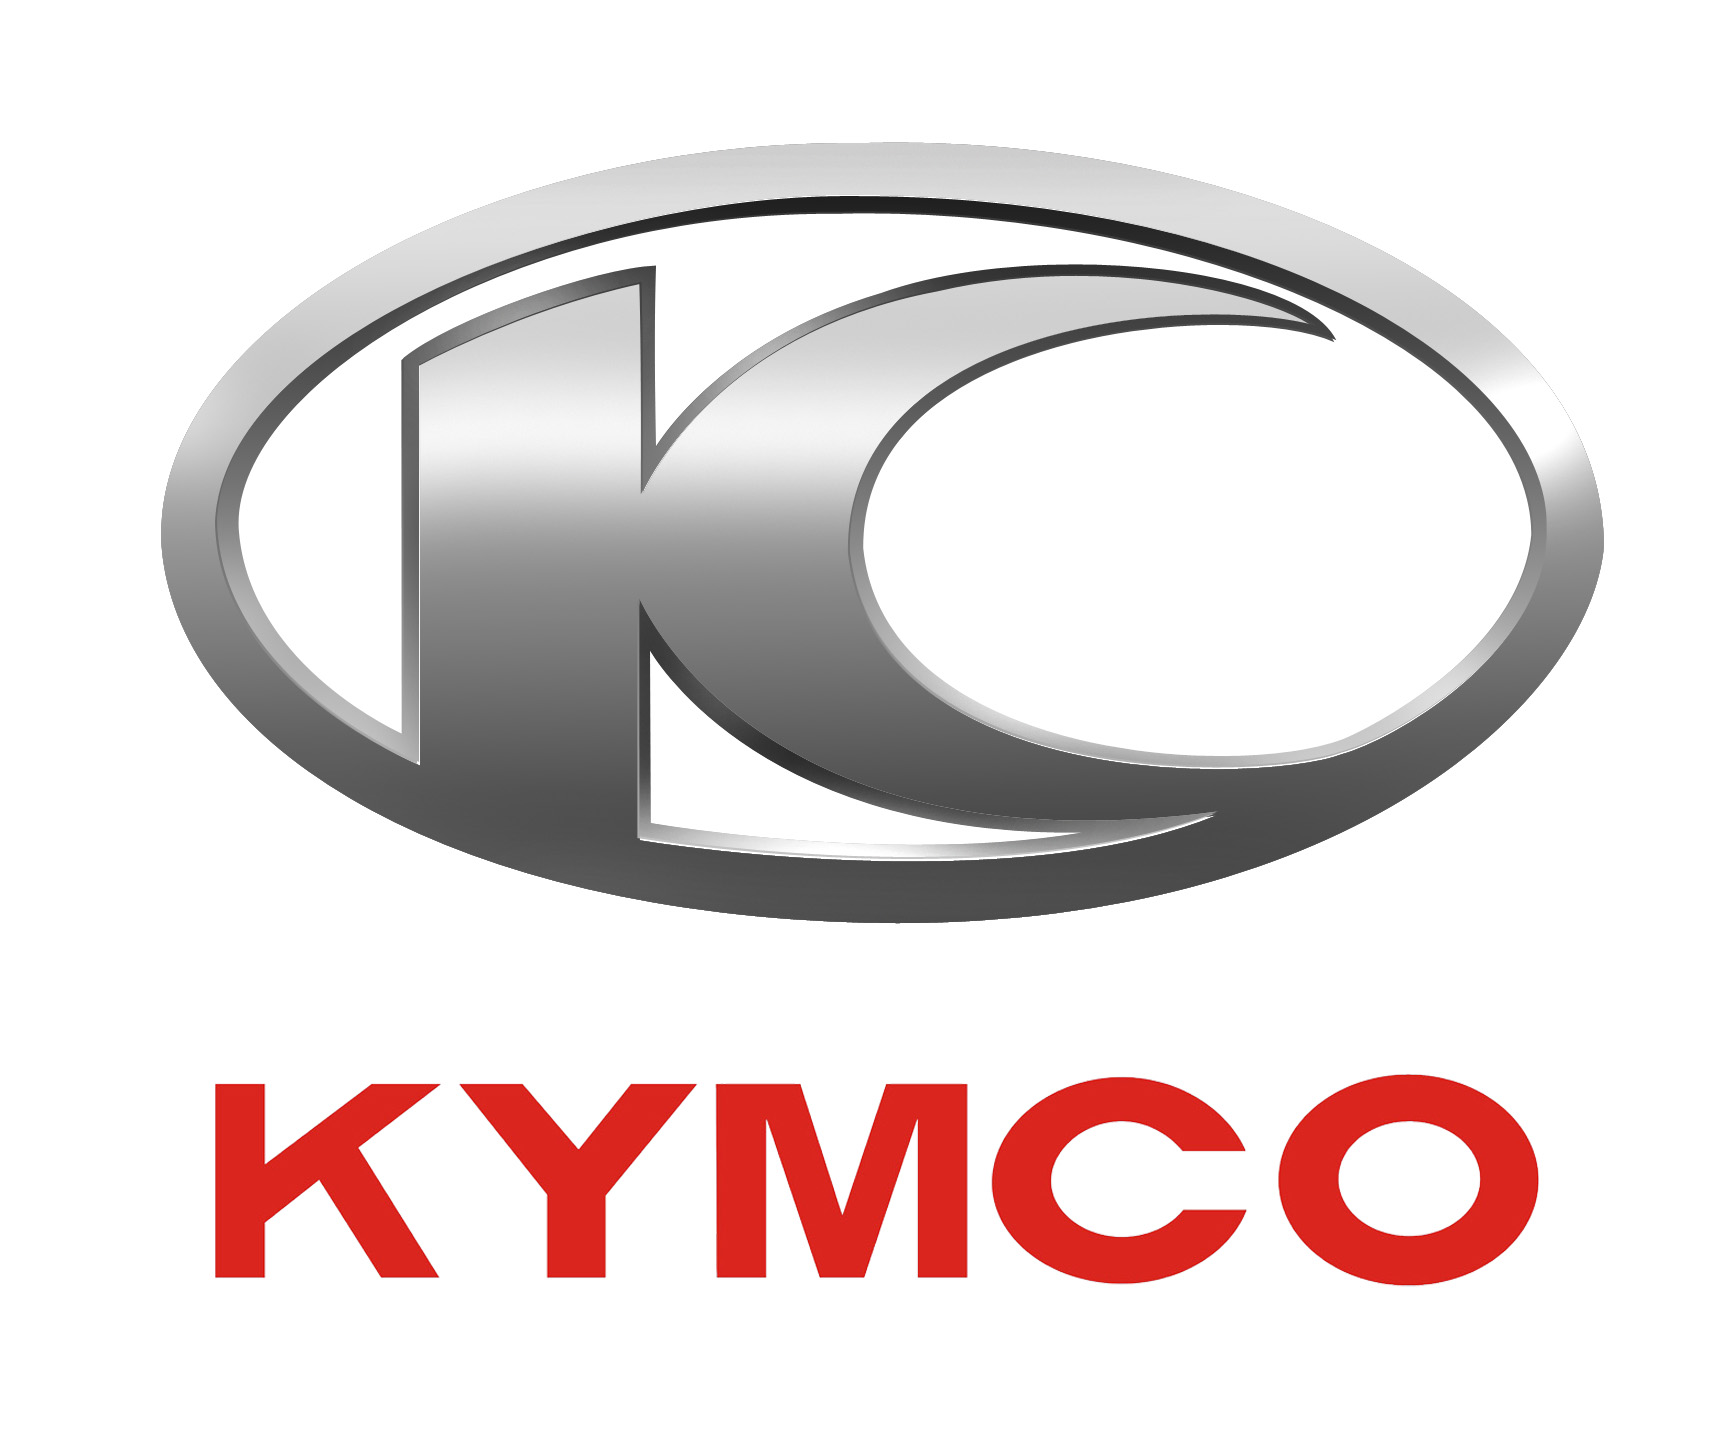 Afbeelding van Transfer Kymco logo rood 4 x 3.5cm